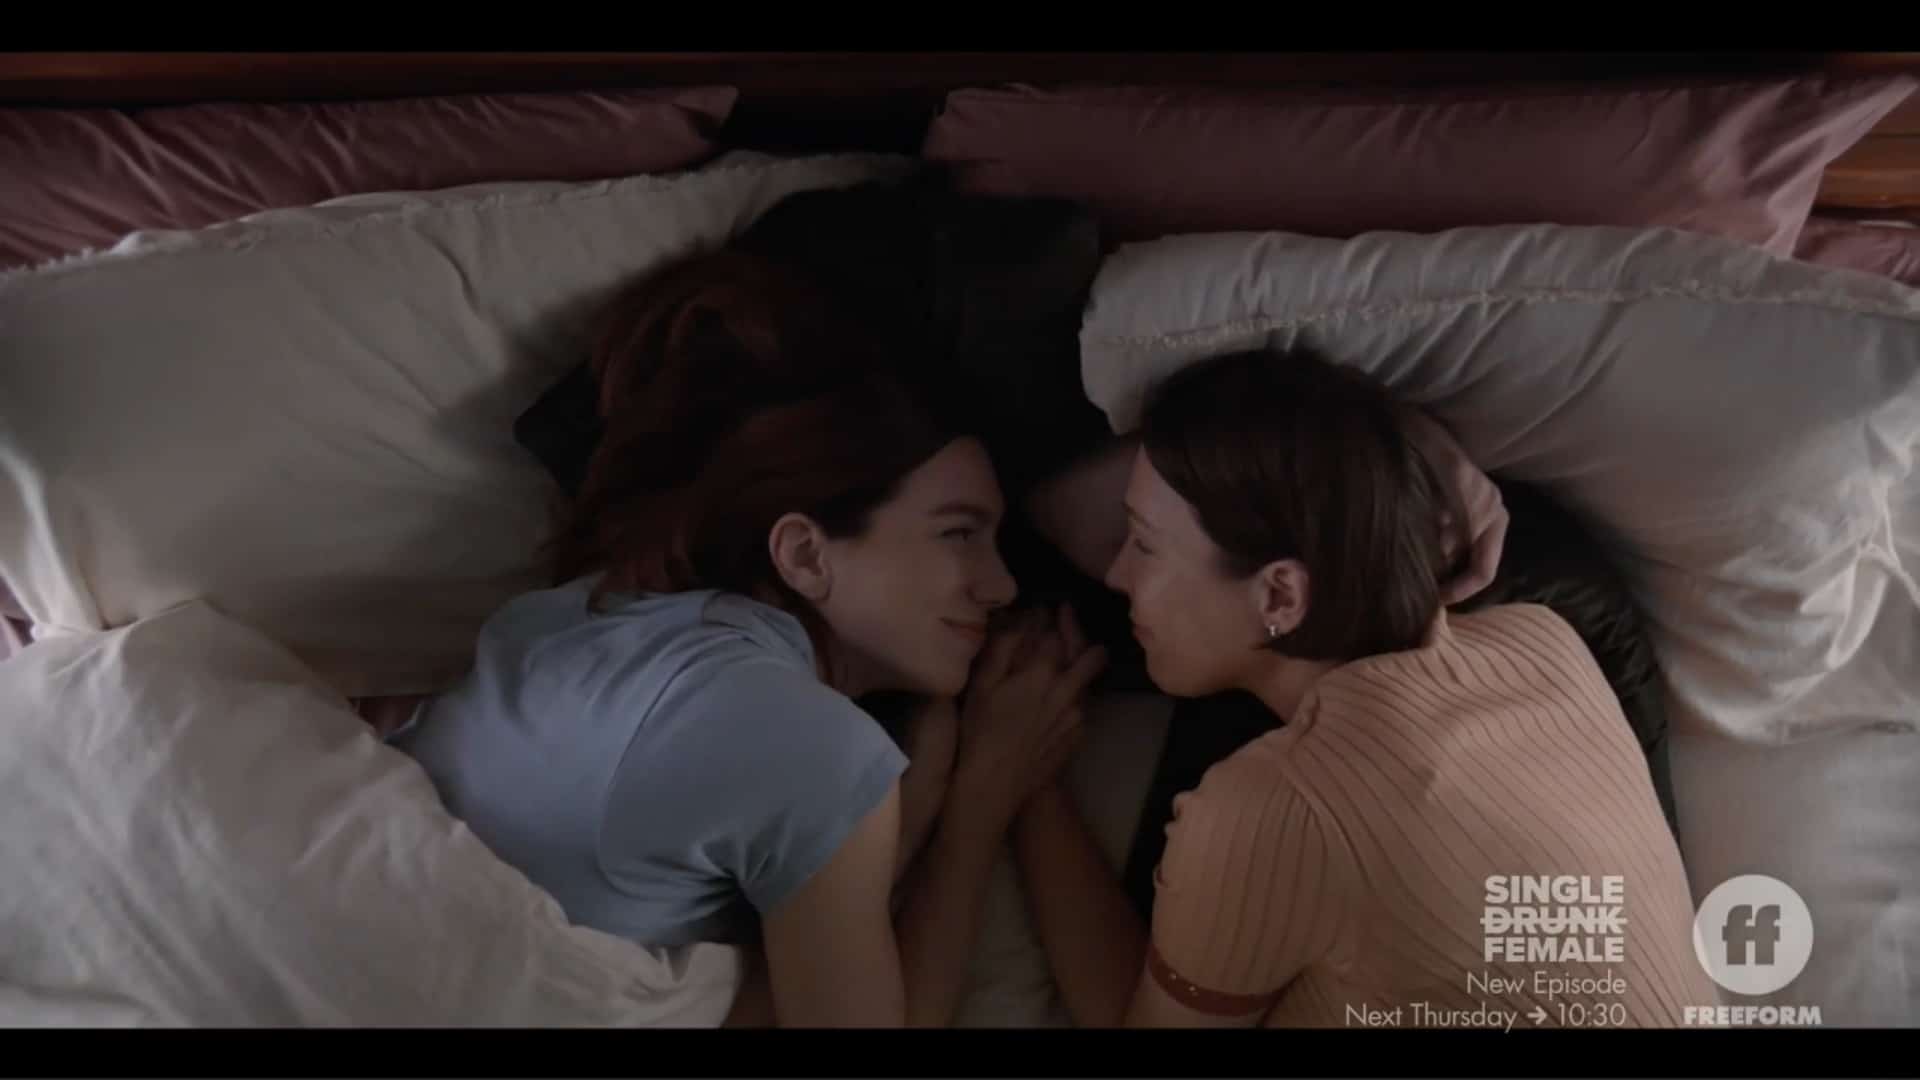 Stefani and Olivia in bed together